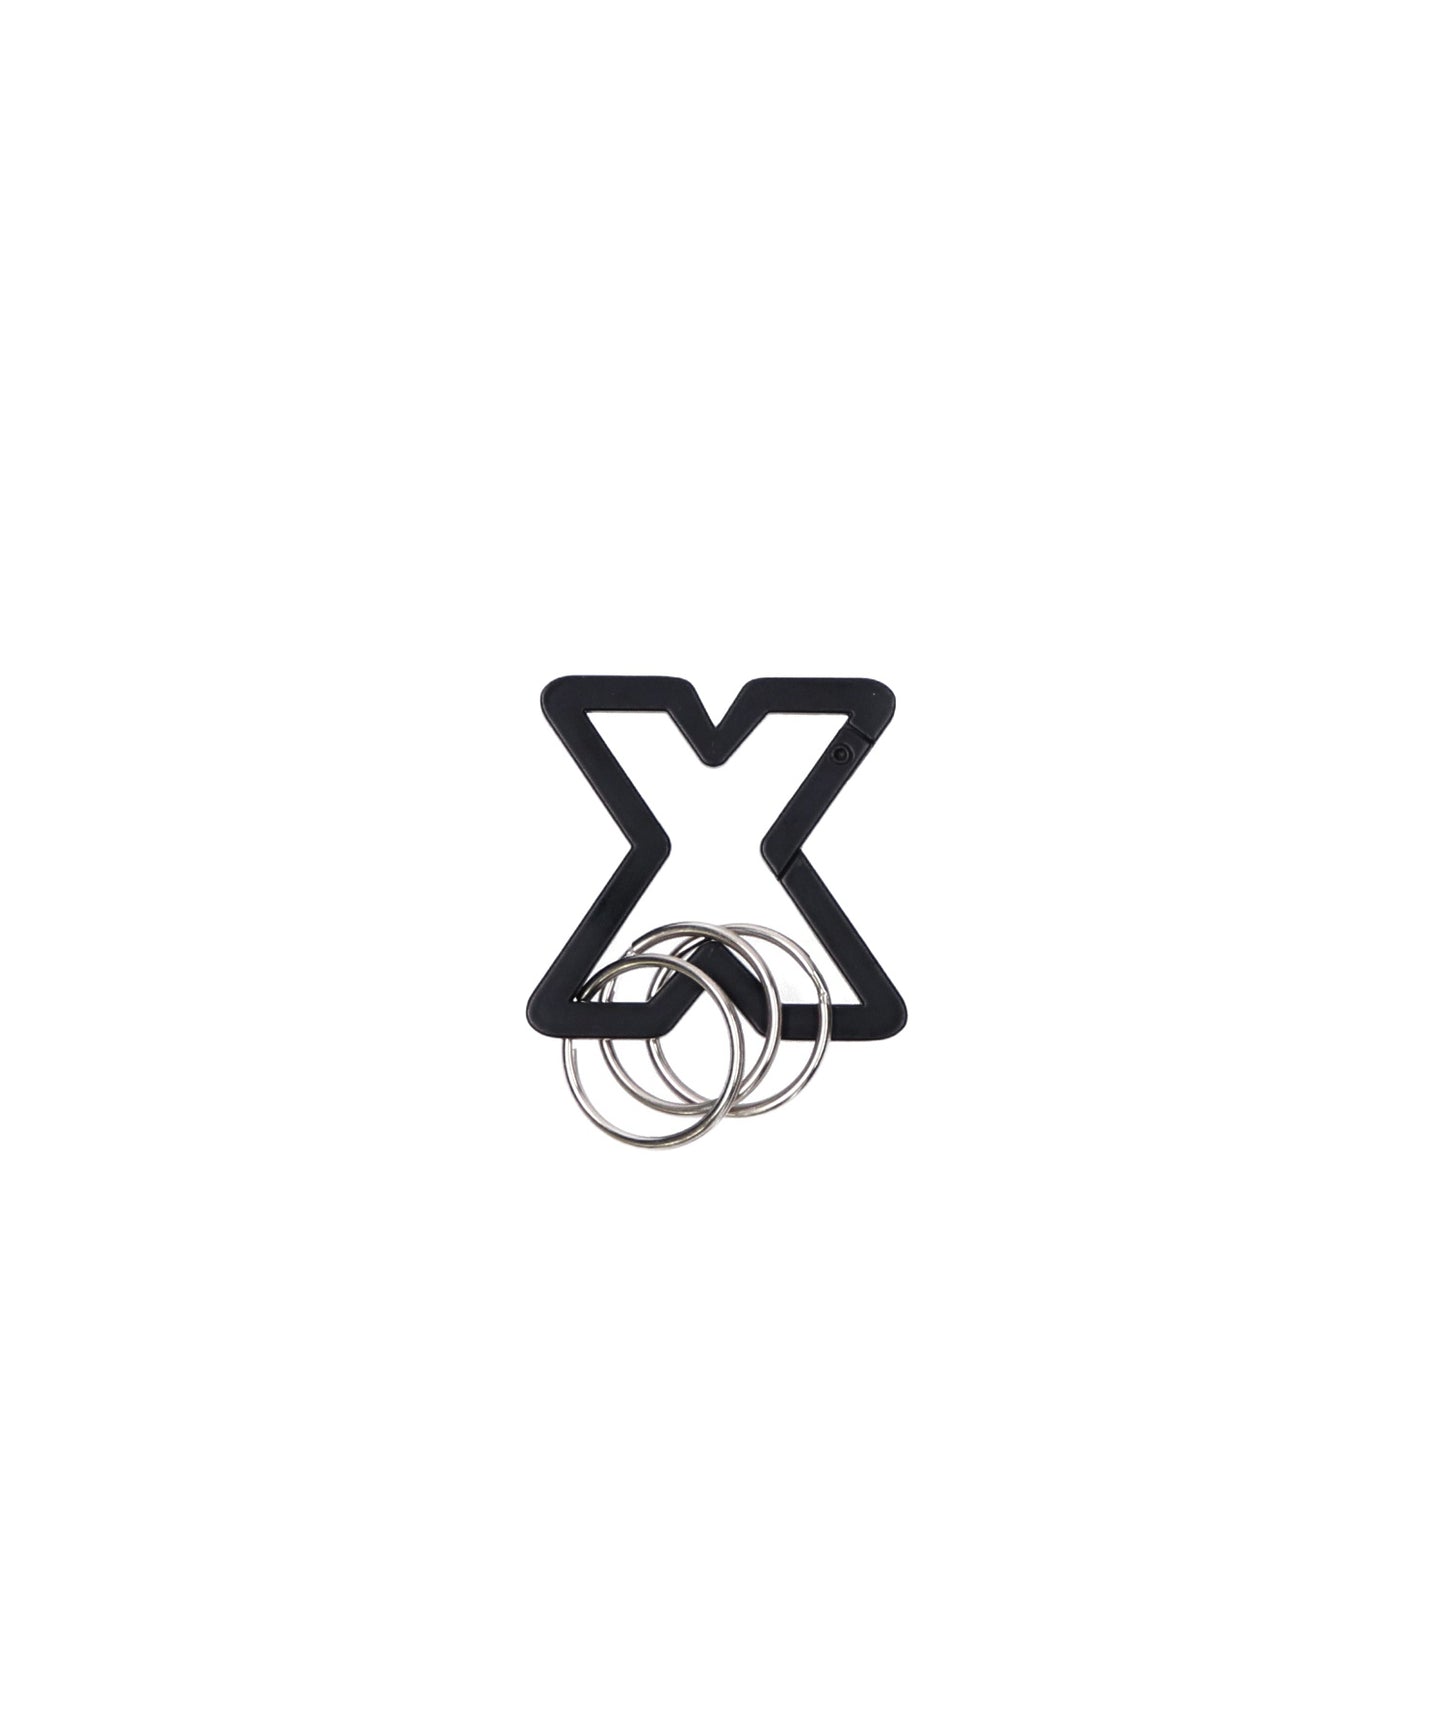 X-SHAPED CARABINER